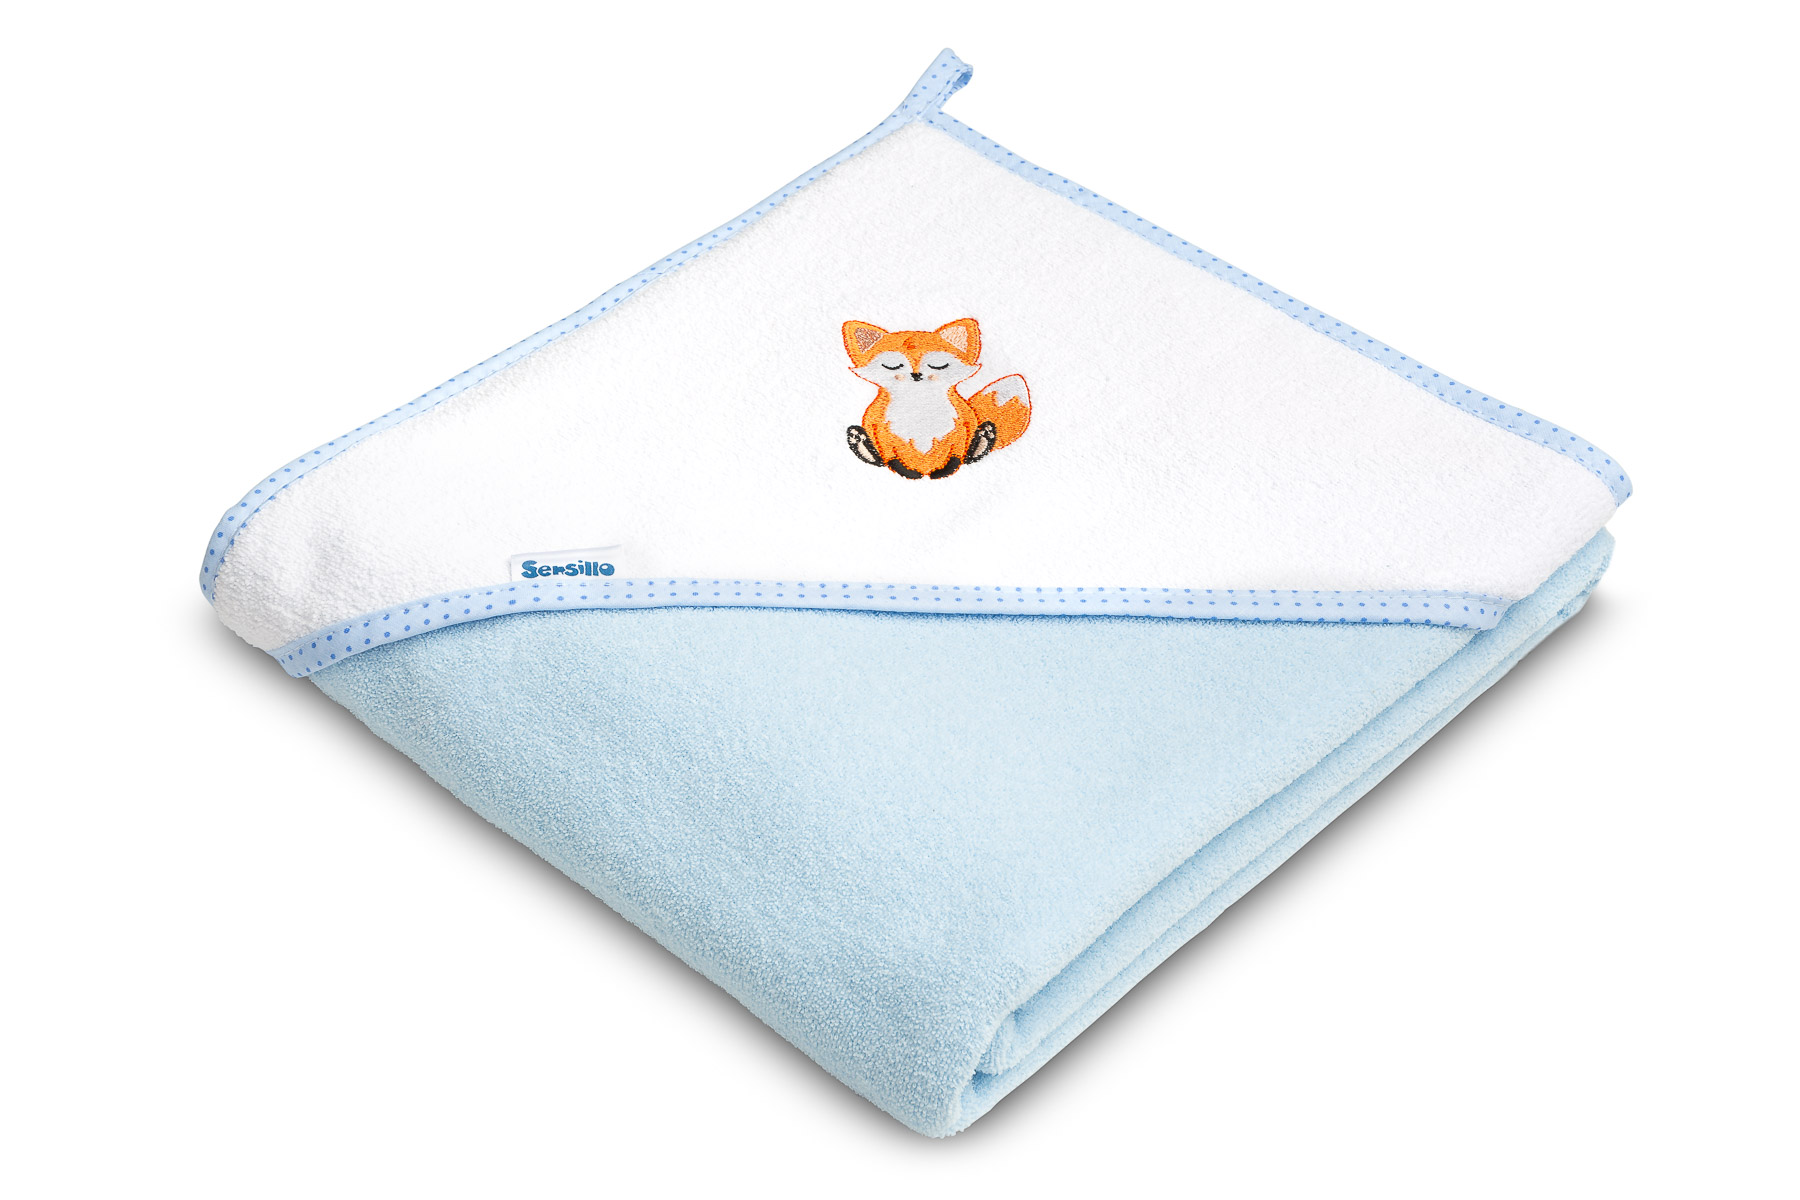 towels - Sensillo bath Hooded Archives